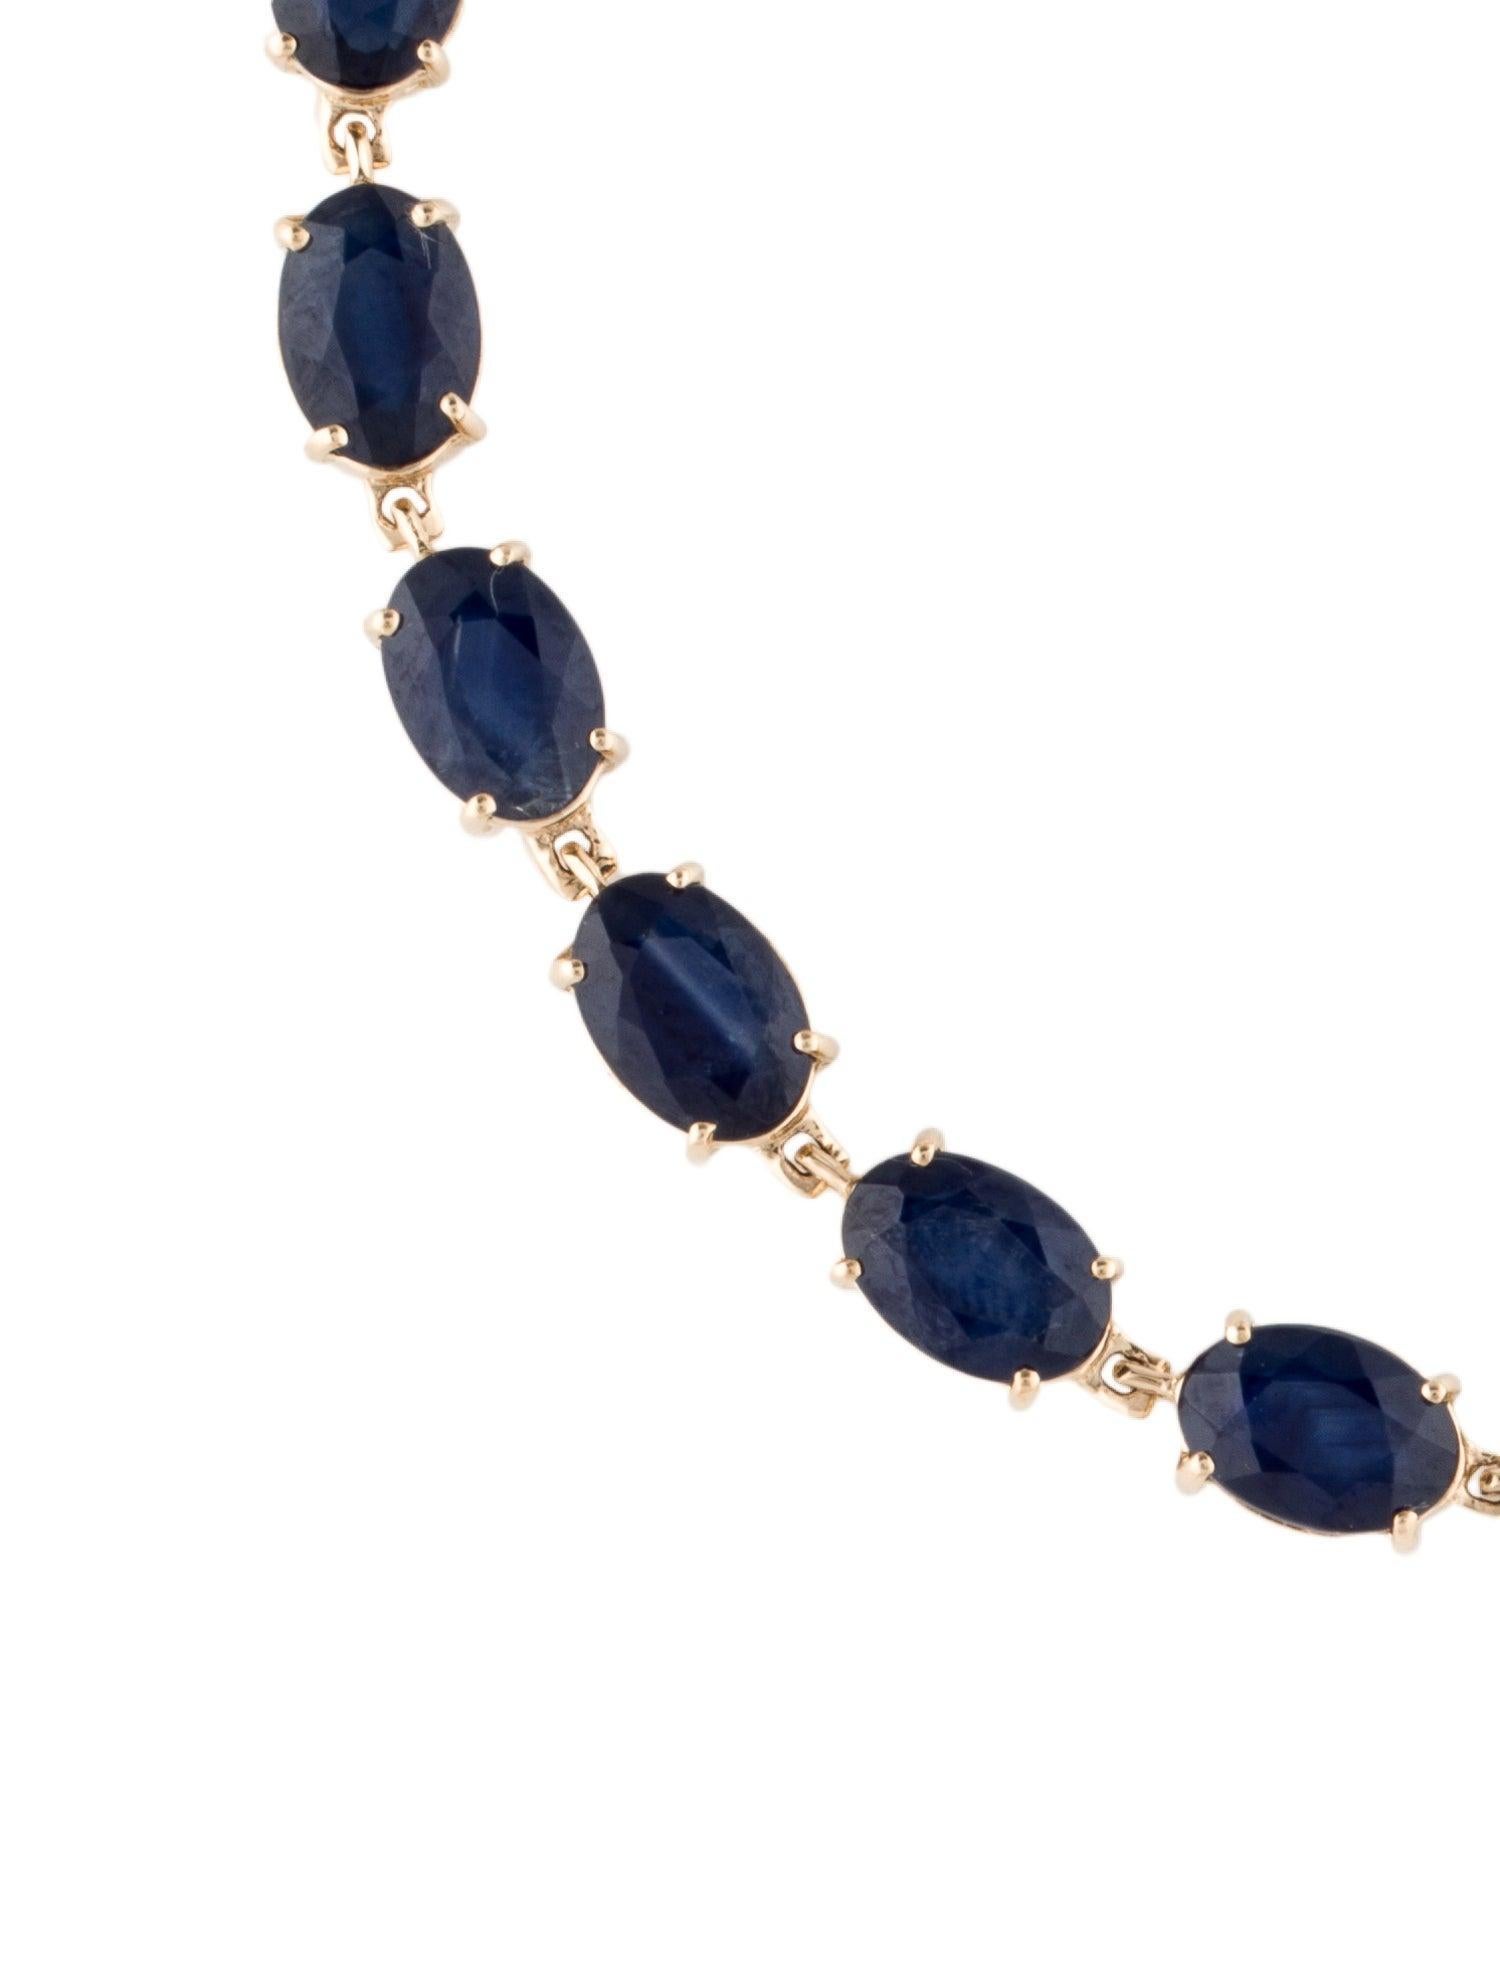 Brilliant Cut 14K 14.70ctw Sapphire Link Bracelet - Timeless Elegance, Exquisite Design For Sale